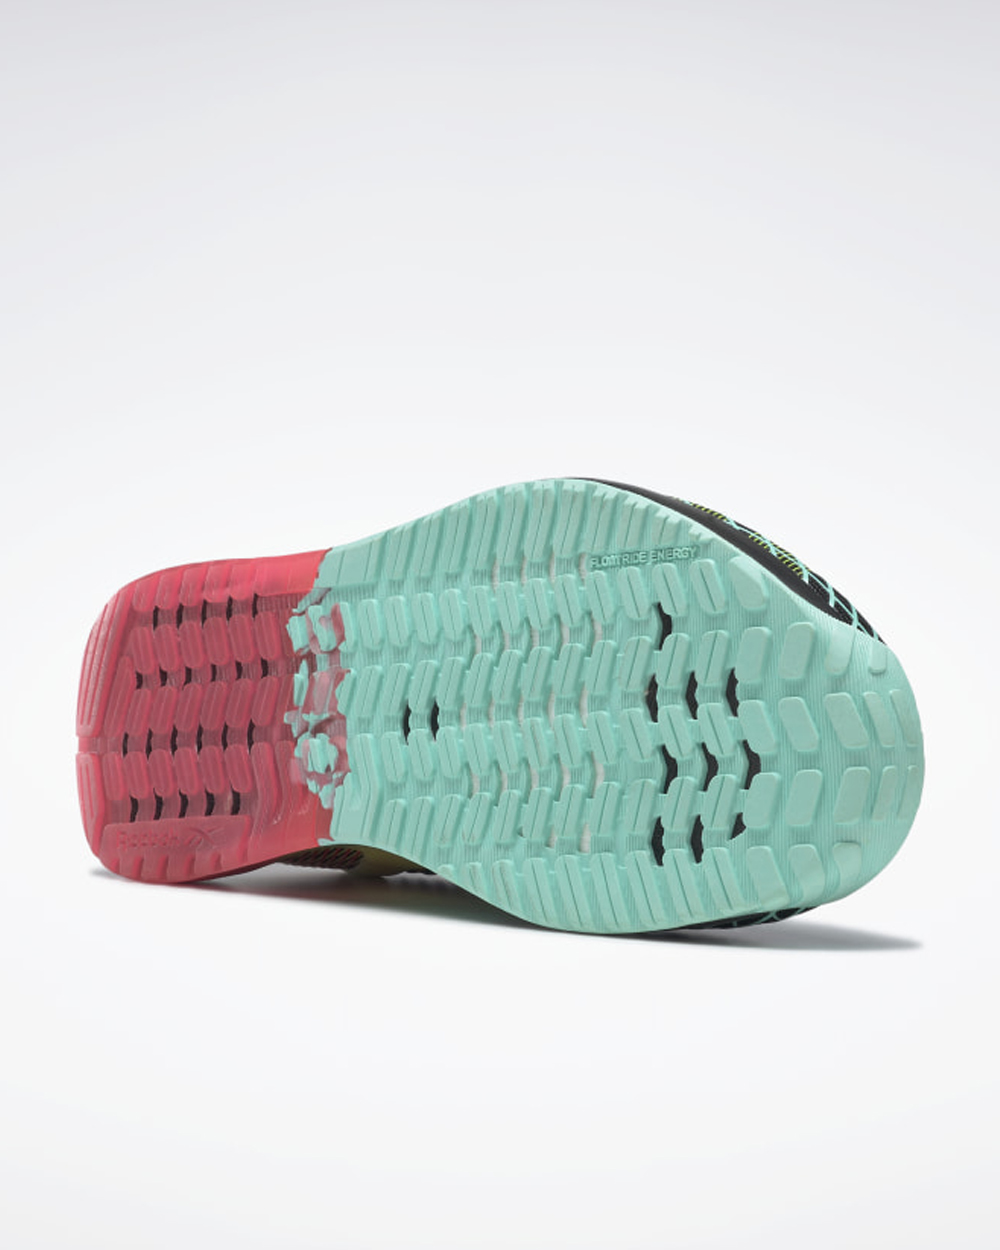 REEBOK Nano X1 Pursuit 3d printed shoes